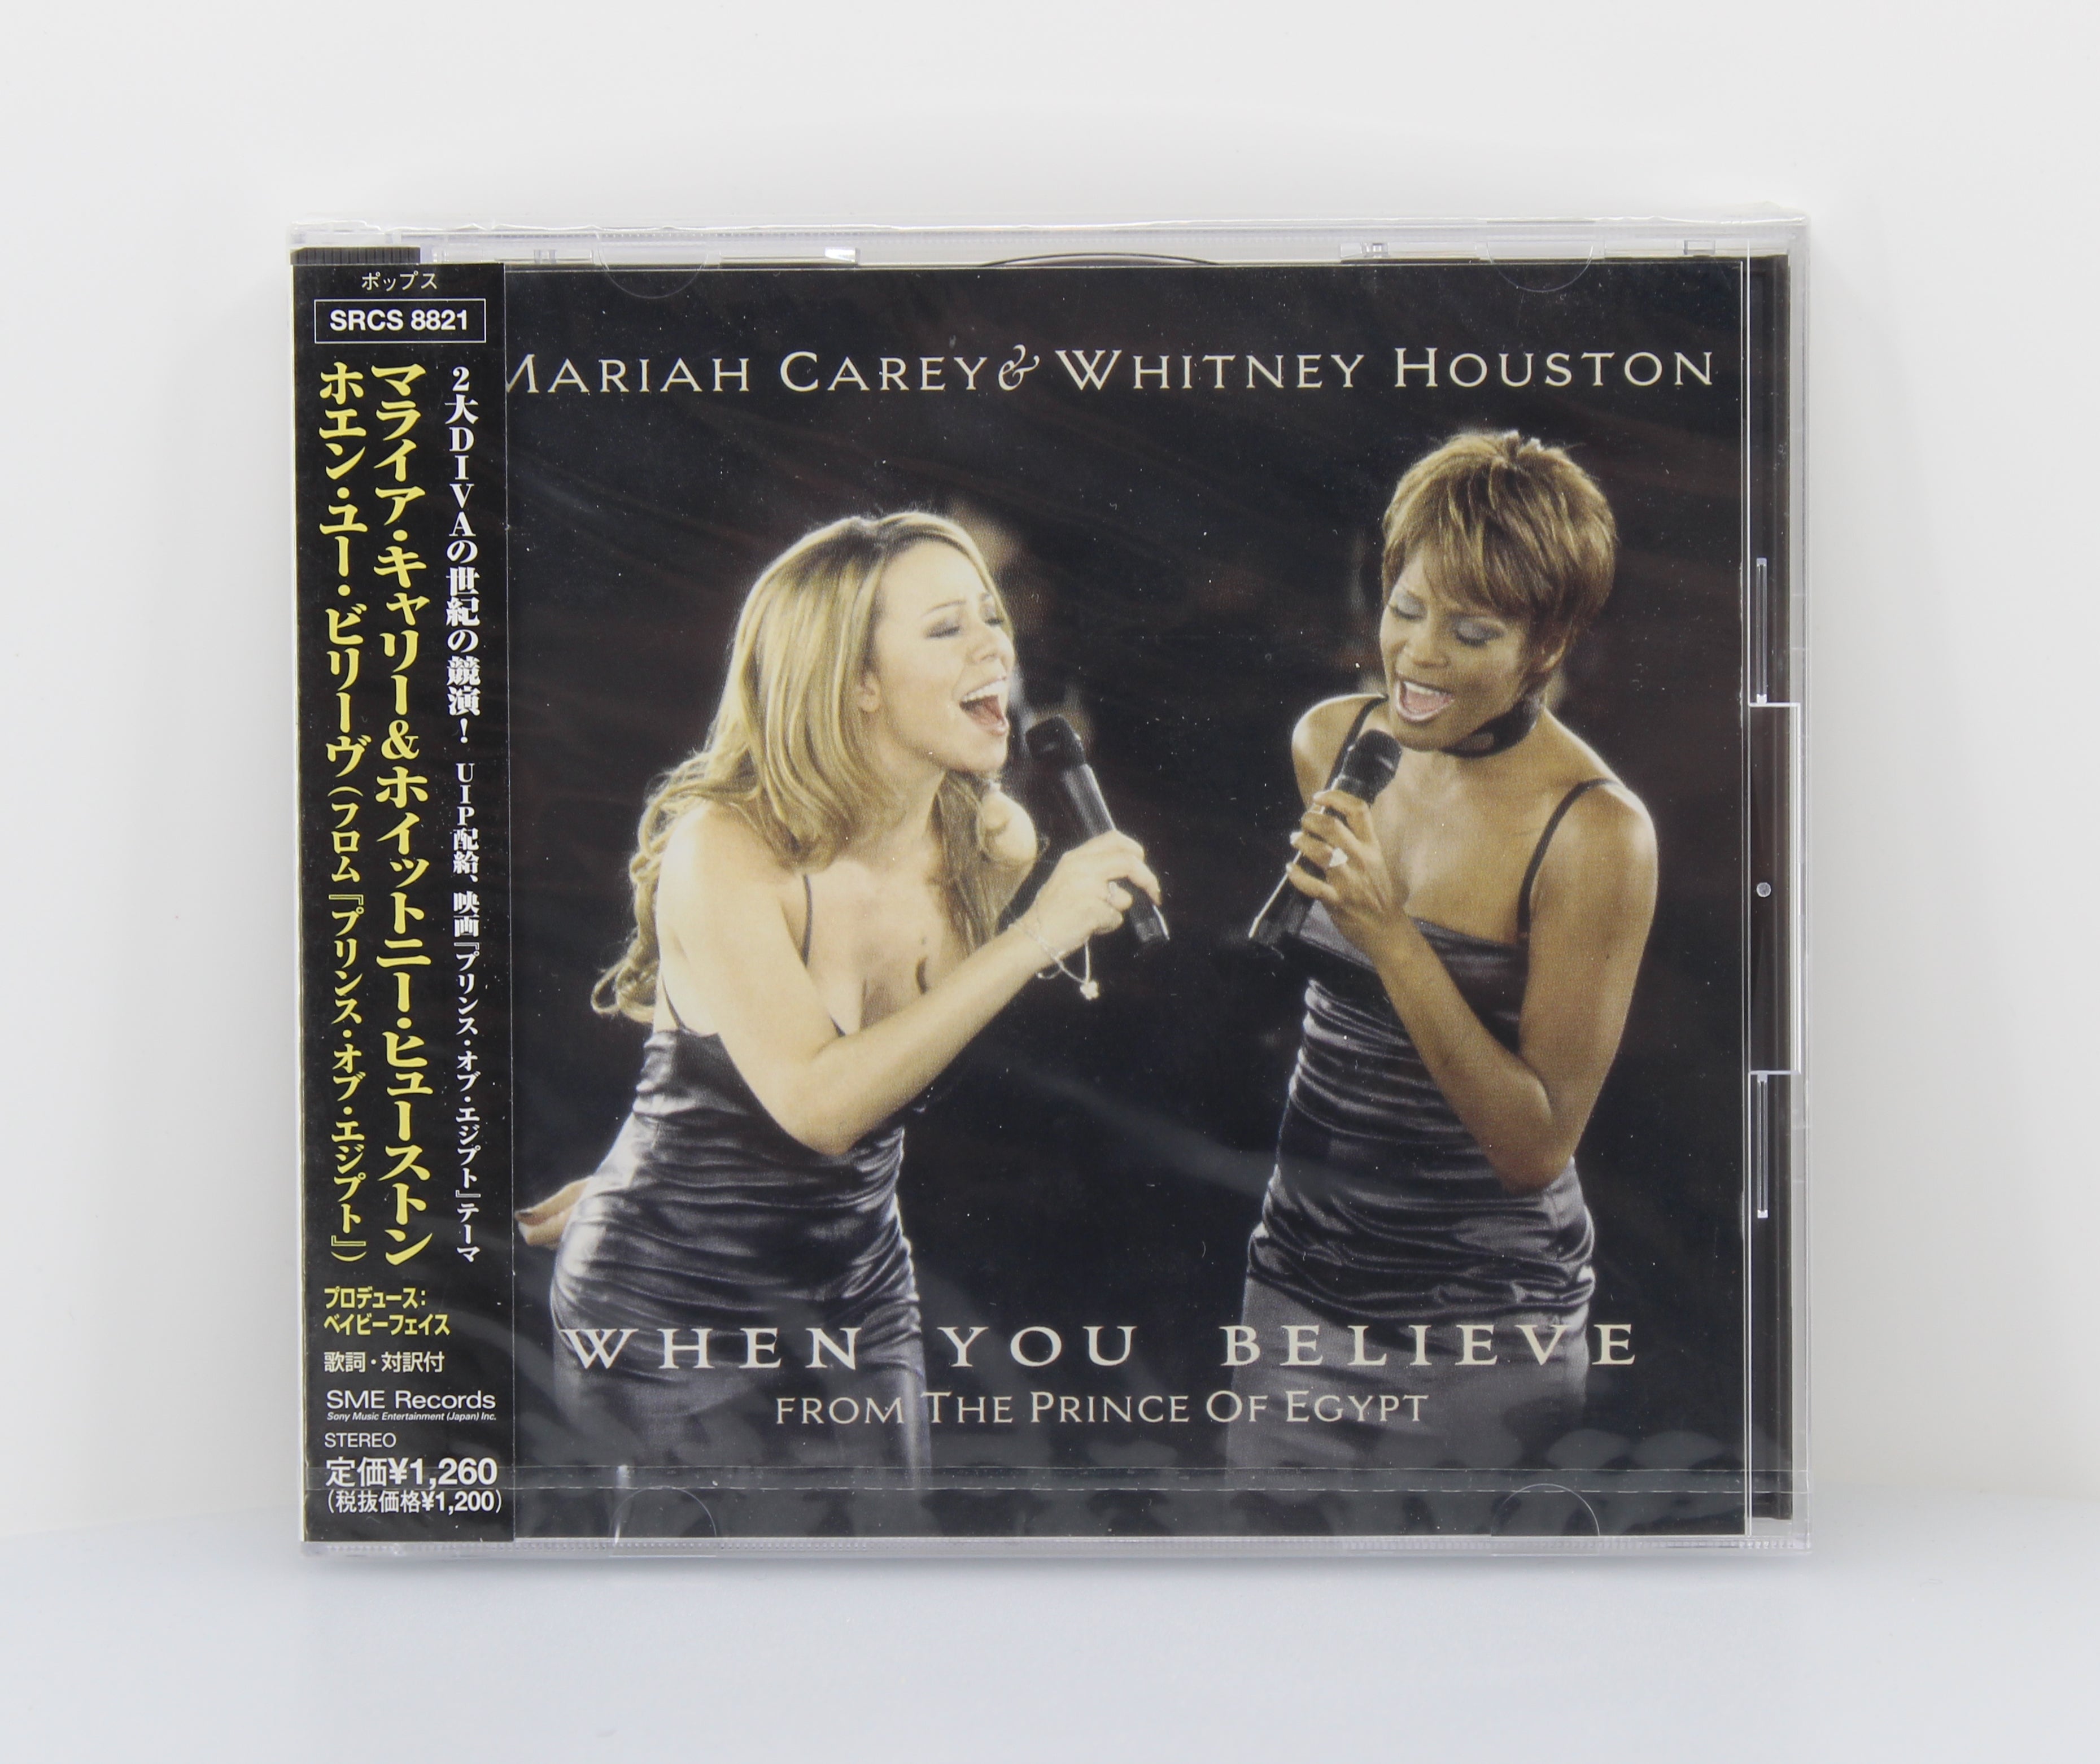 Mariah Carey, Whitney Houston - When You Believe, CD Single, Japan